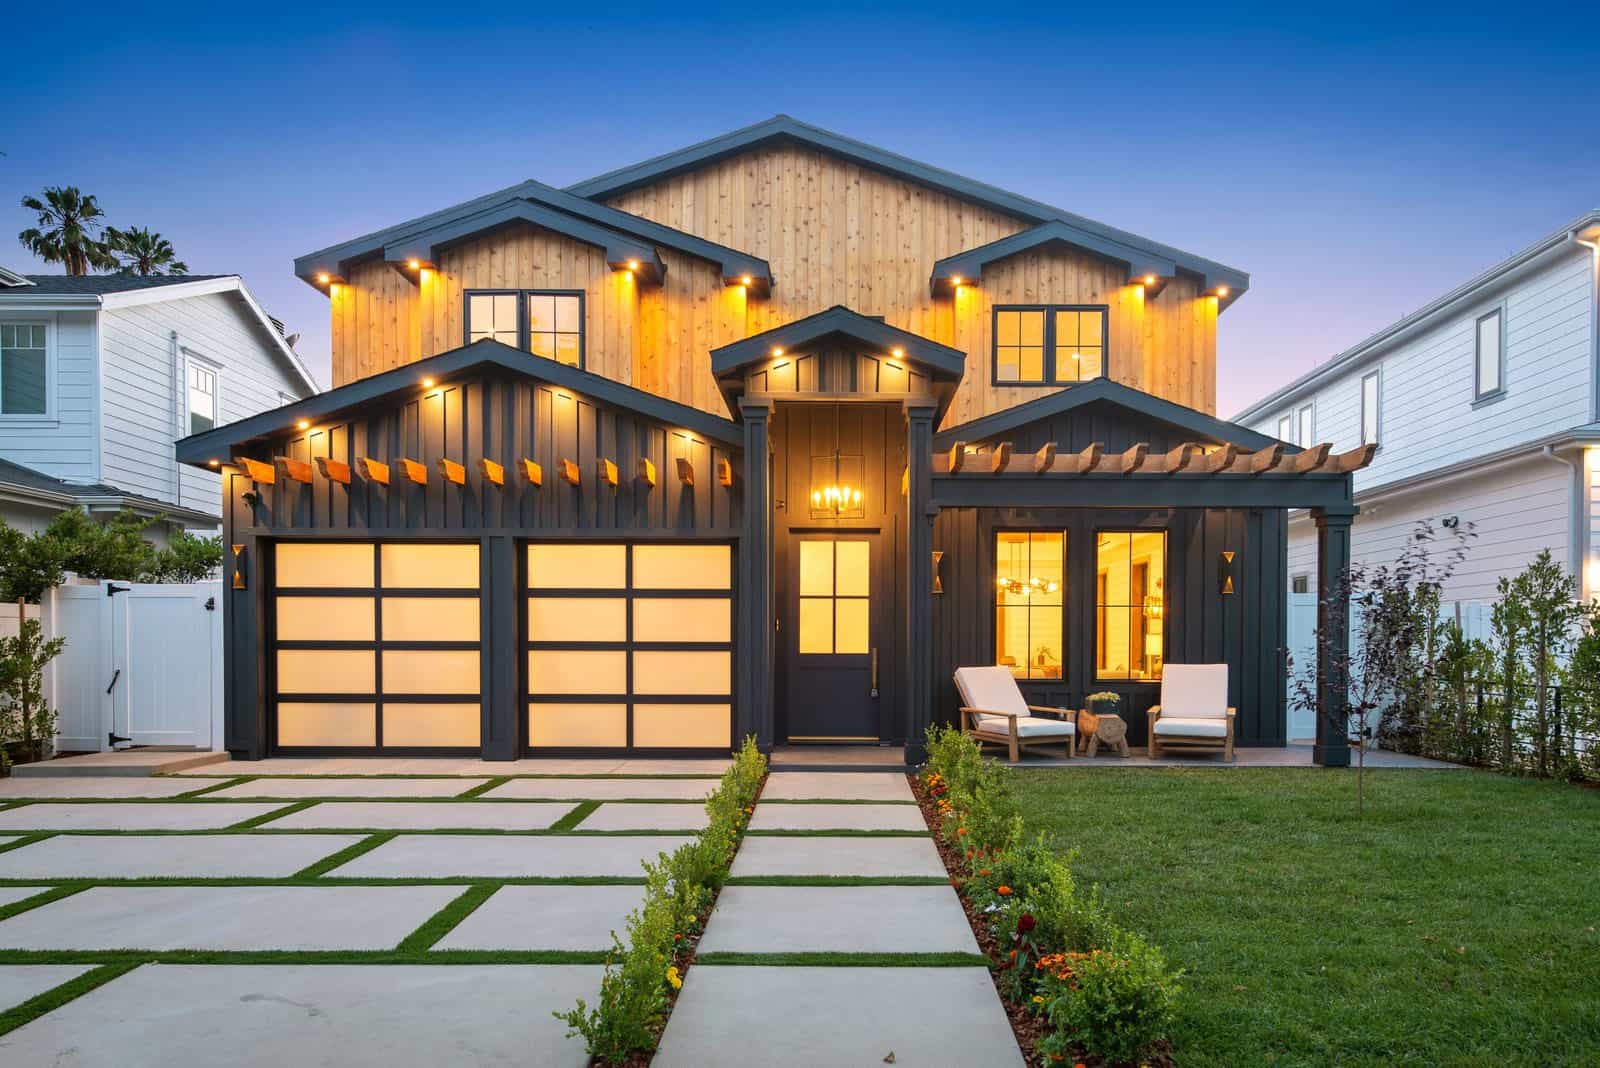 Modern farmhouse home tour in California with beautiful design ideas